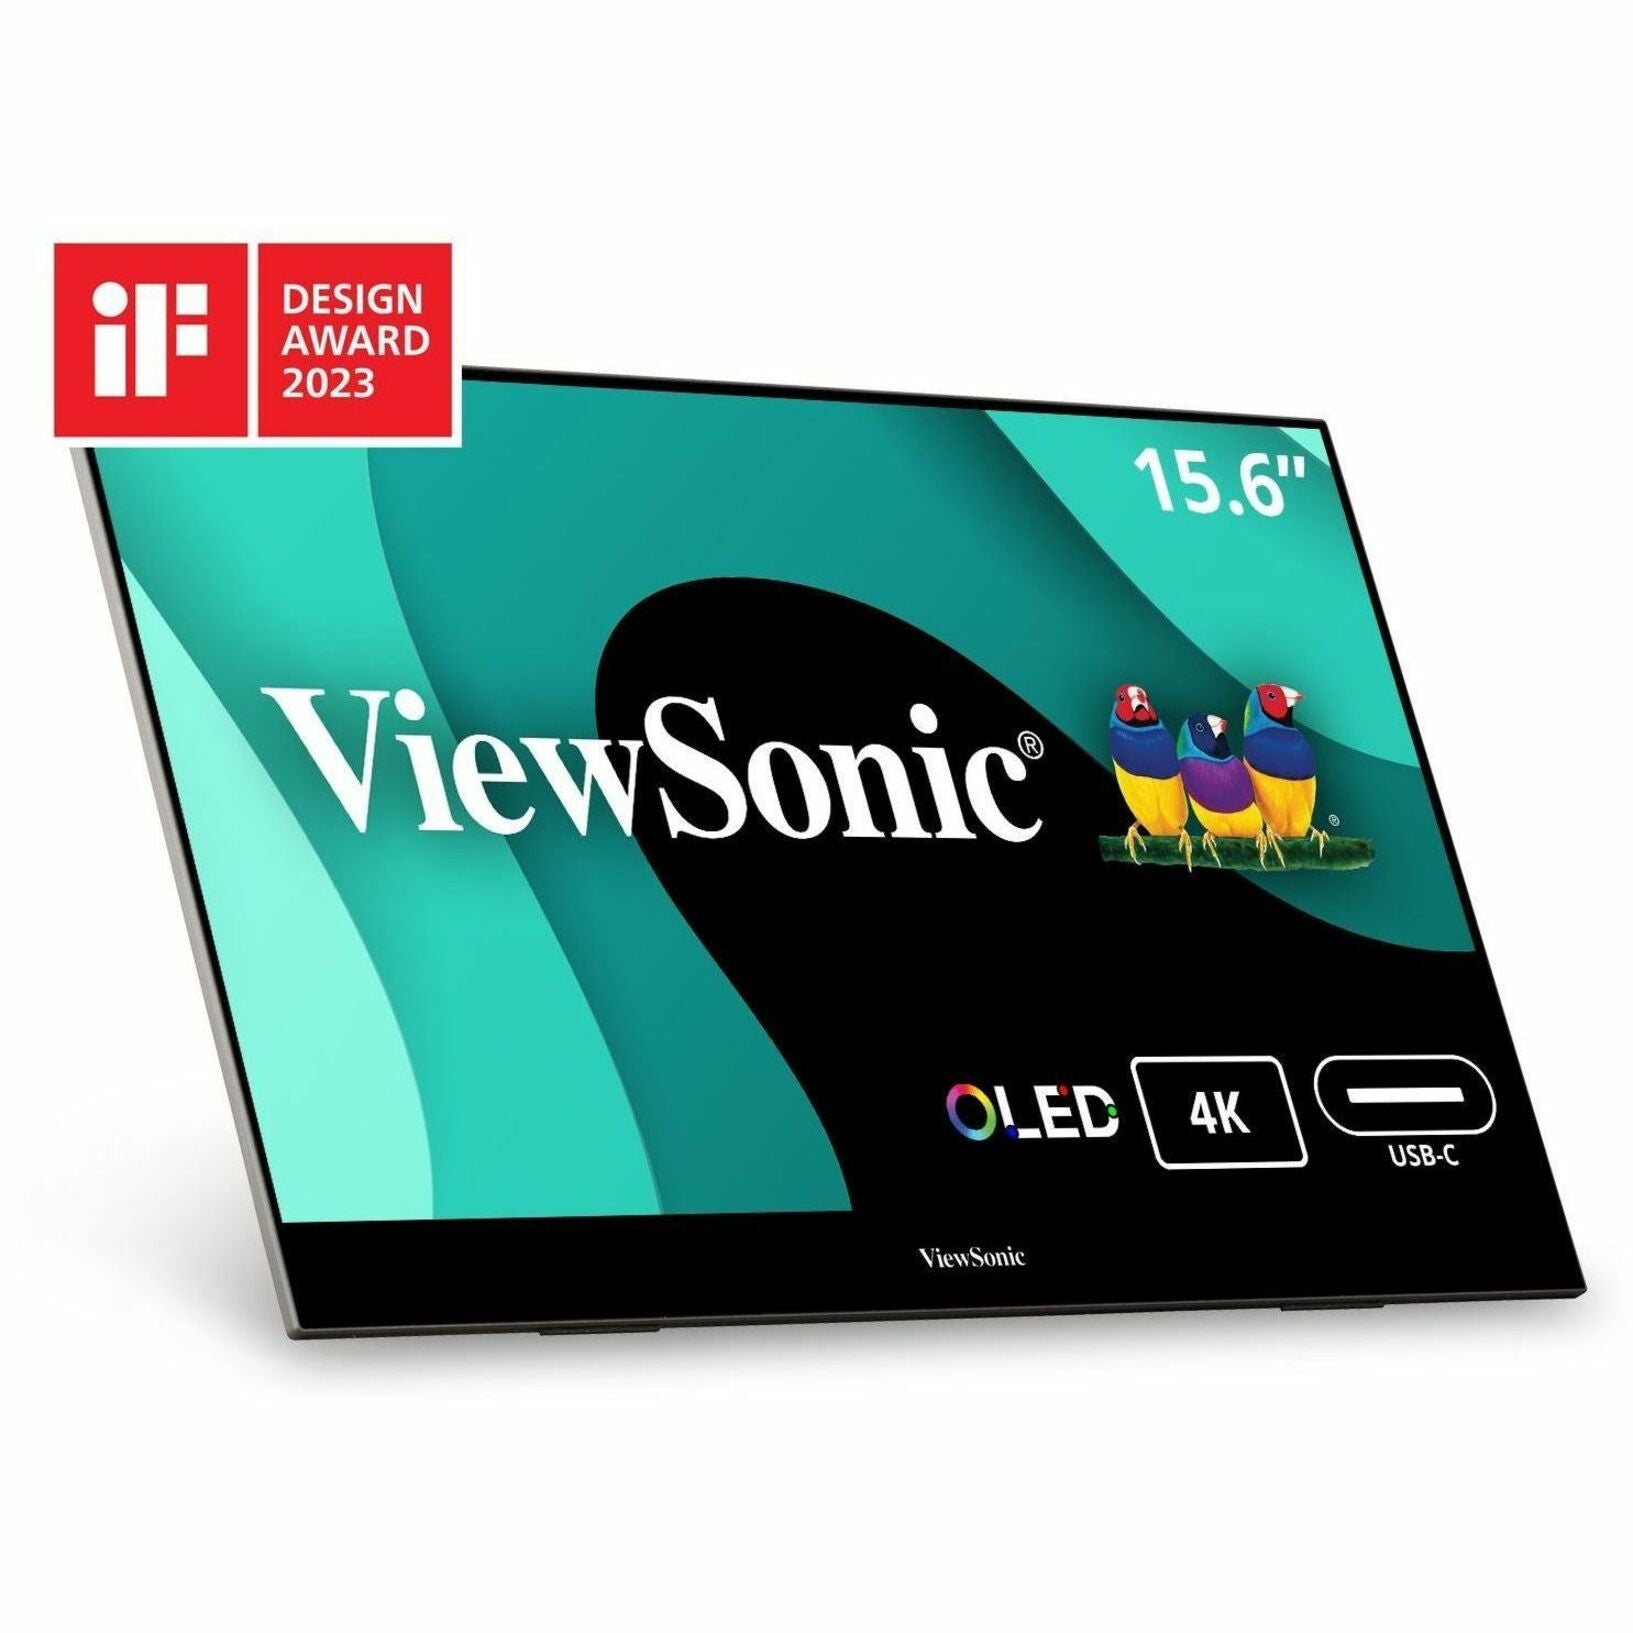 ViewSonic VX1655-4K-OLED 15.6 4K UHD OLED Monitor - 16:9 - Black